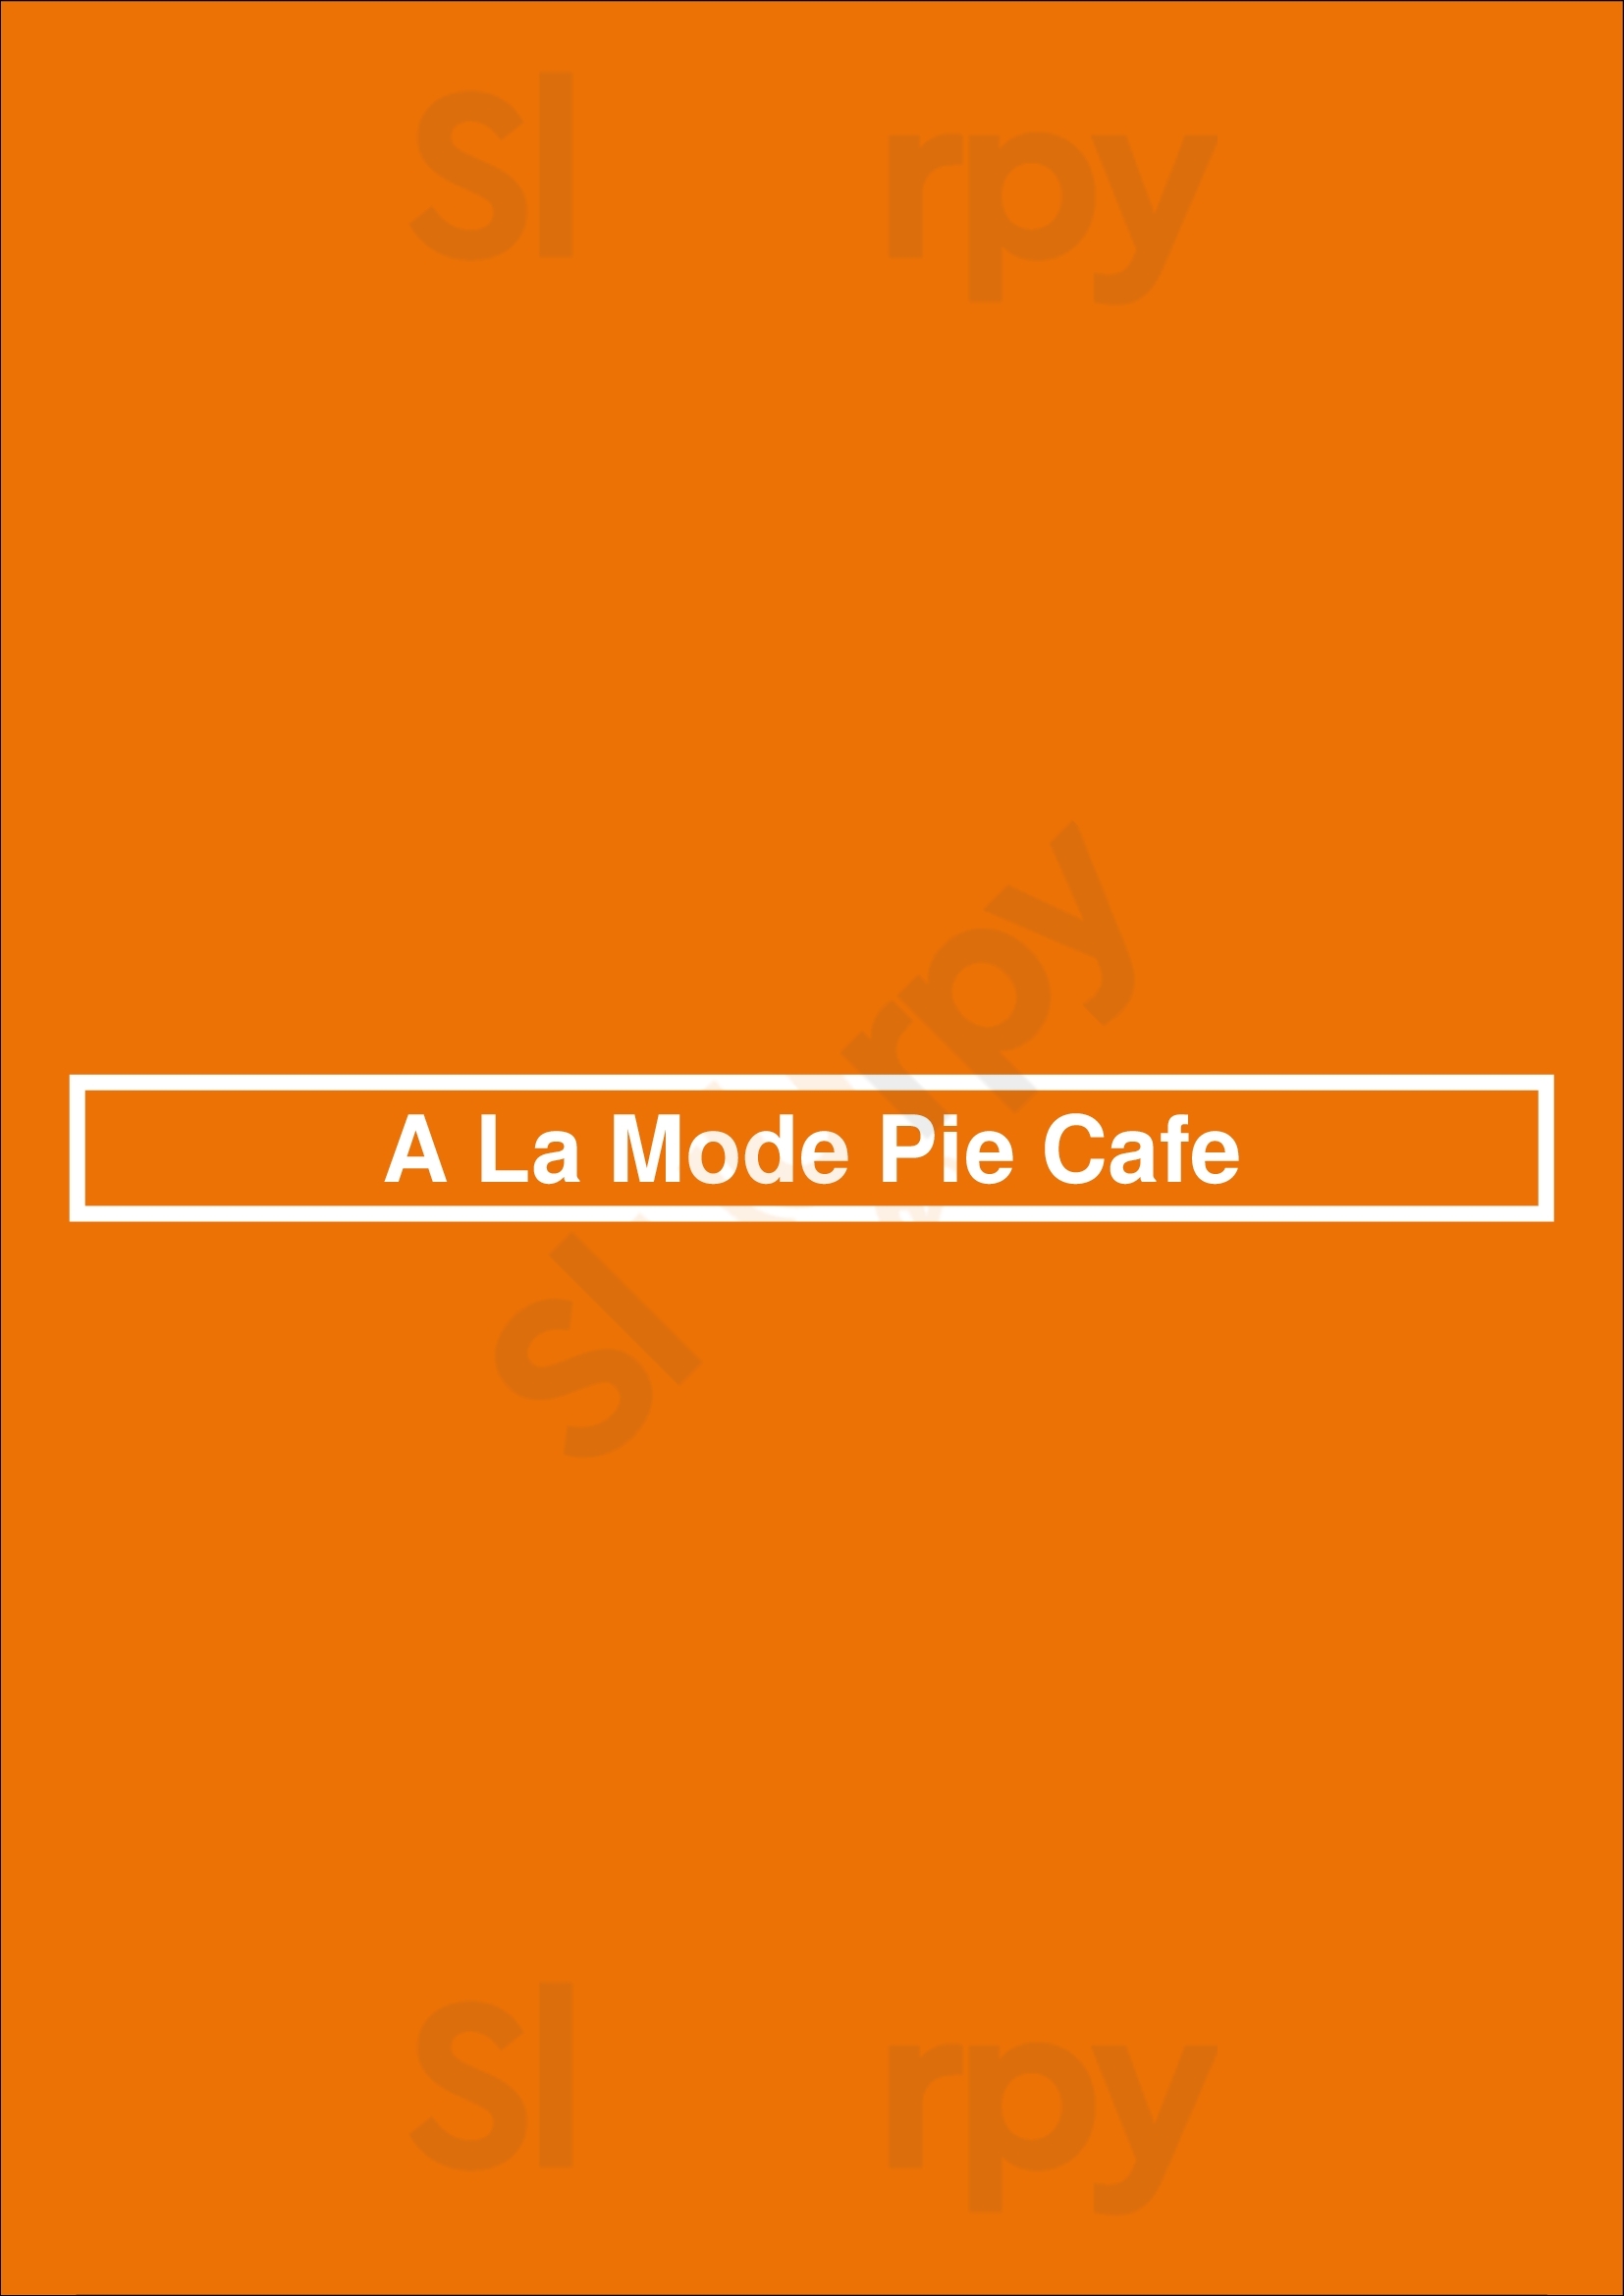 A La Mode Pie Cafe Vancouver Menu - 1